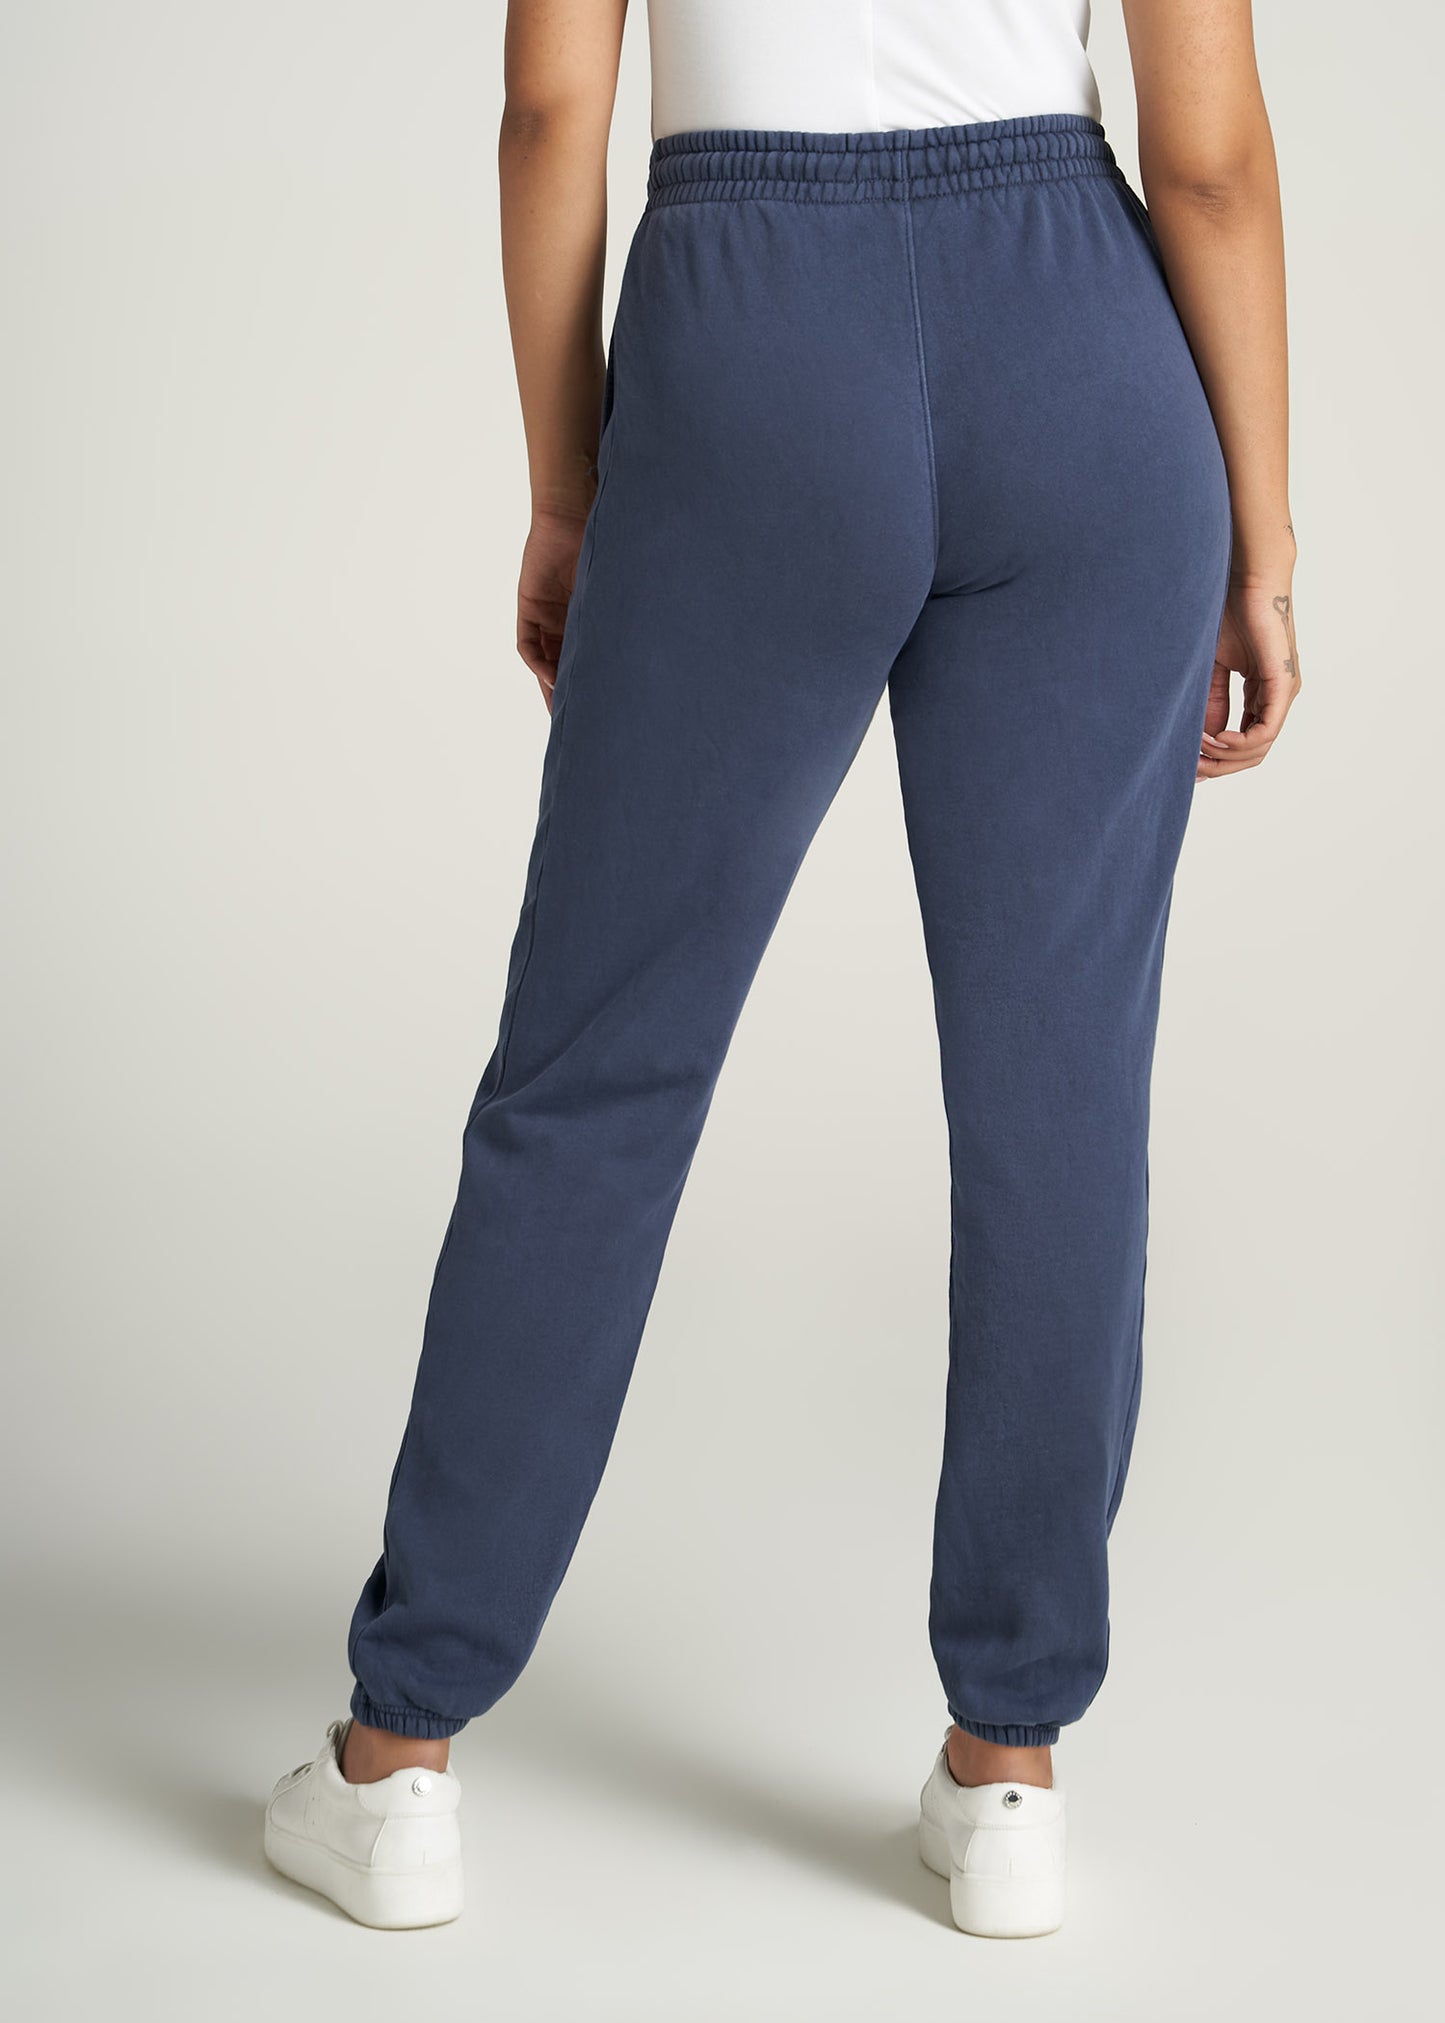 Slim Sweatpants Women's: High-Waisted Tall Women Black Sweatpants –  American Tall